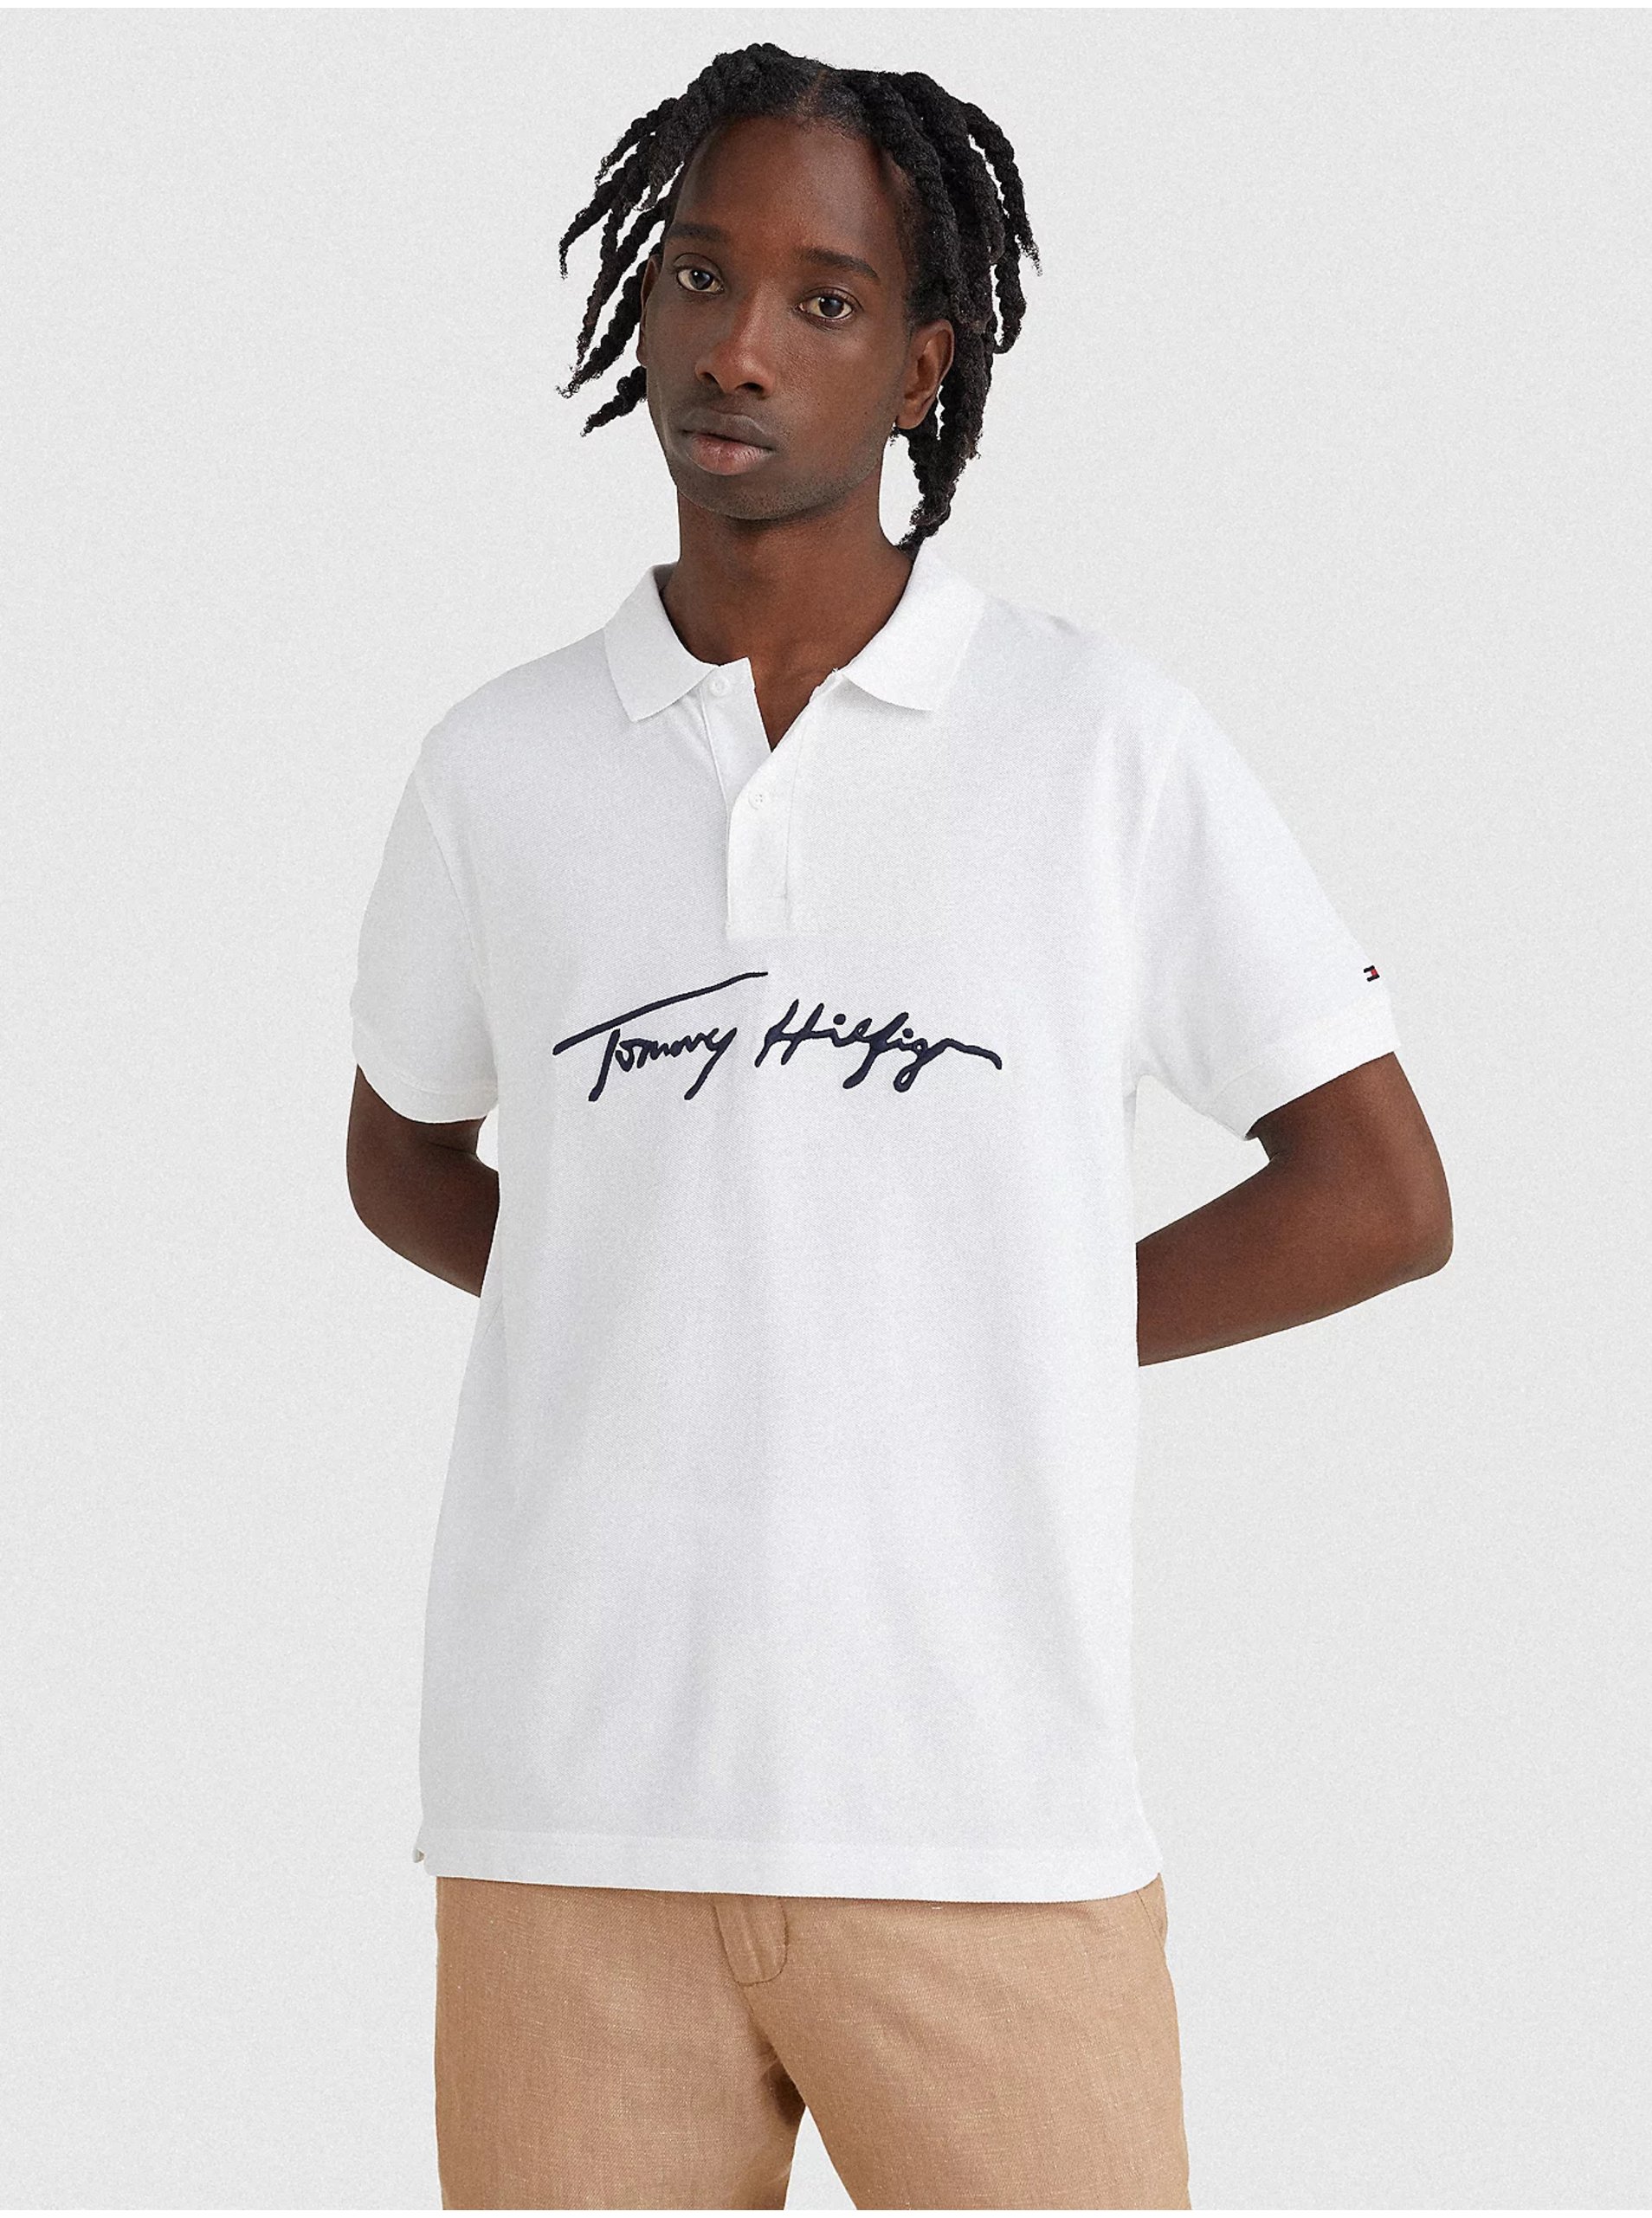 White Men's Polo Shirt Tommy Hilfiger - Men's